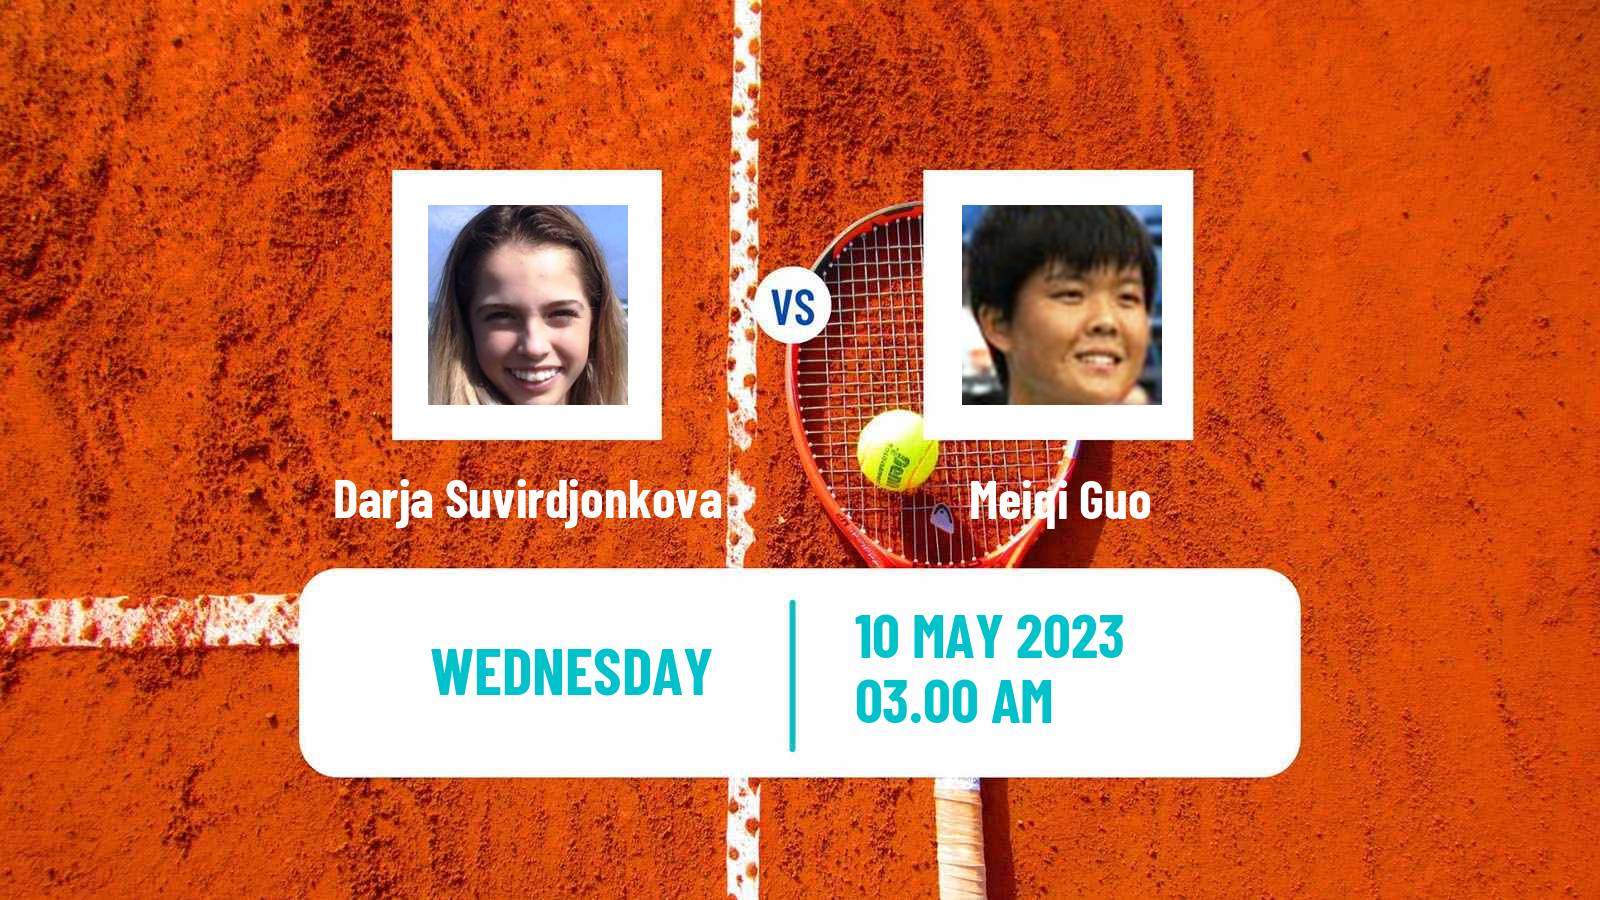 Tennis ITF Tournaments Darja Suvirdjonkova - Meiqi Guo